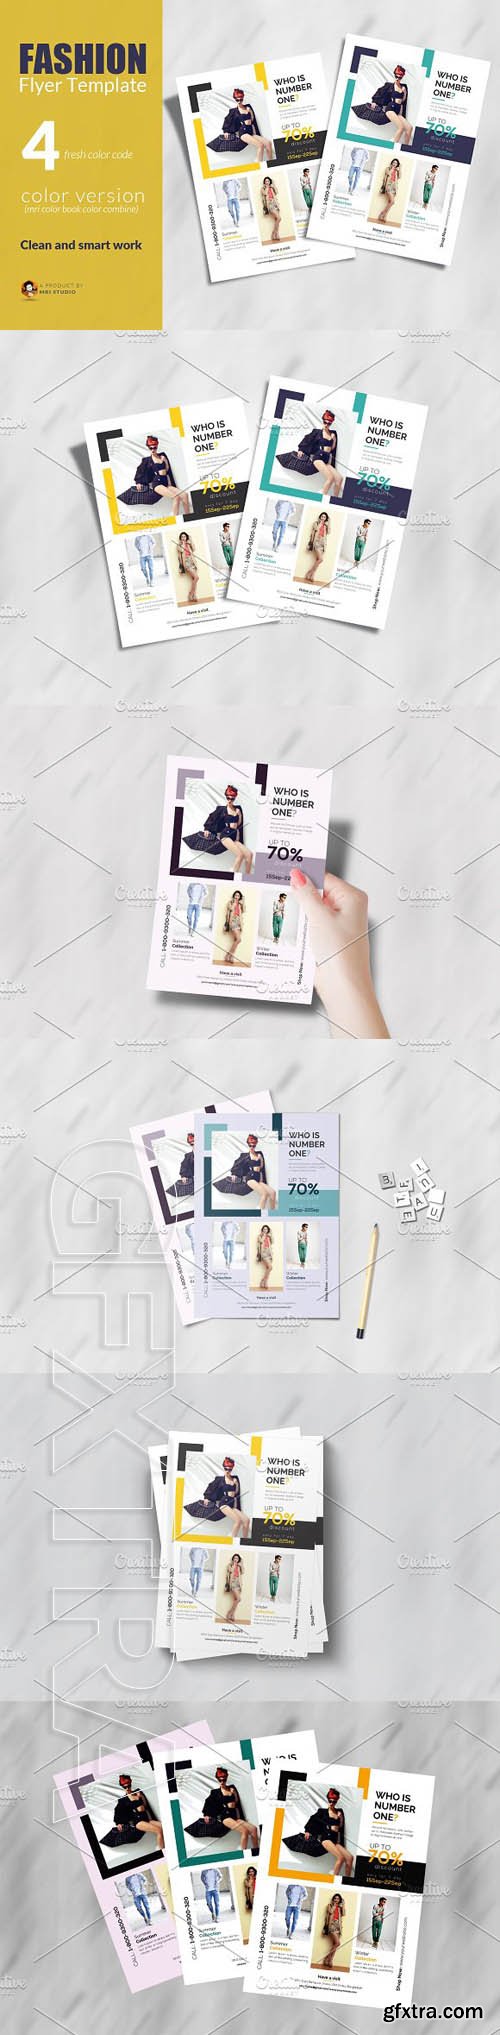 CreativeMarket - Fashion Flyer Template 1862278